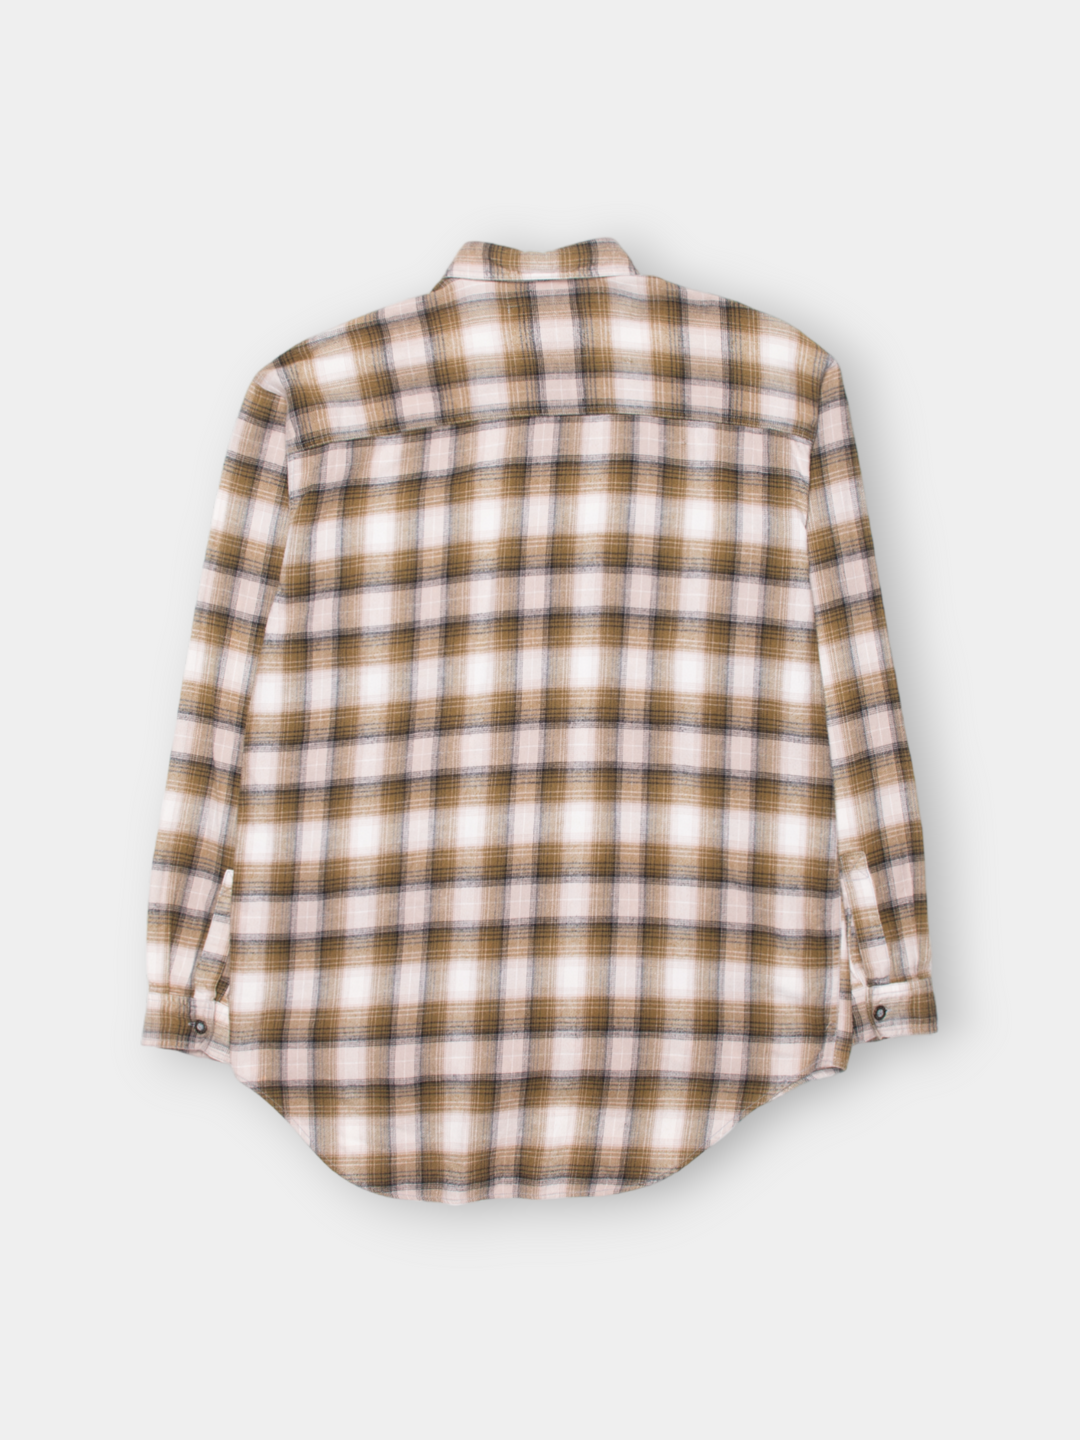 90s Levi’s Plaid Shirt (M)